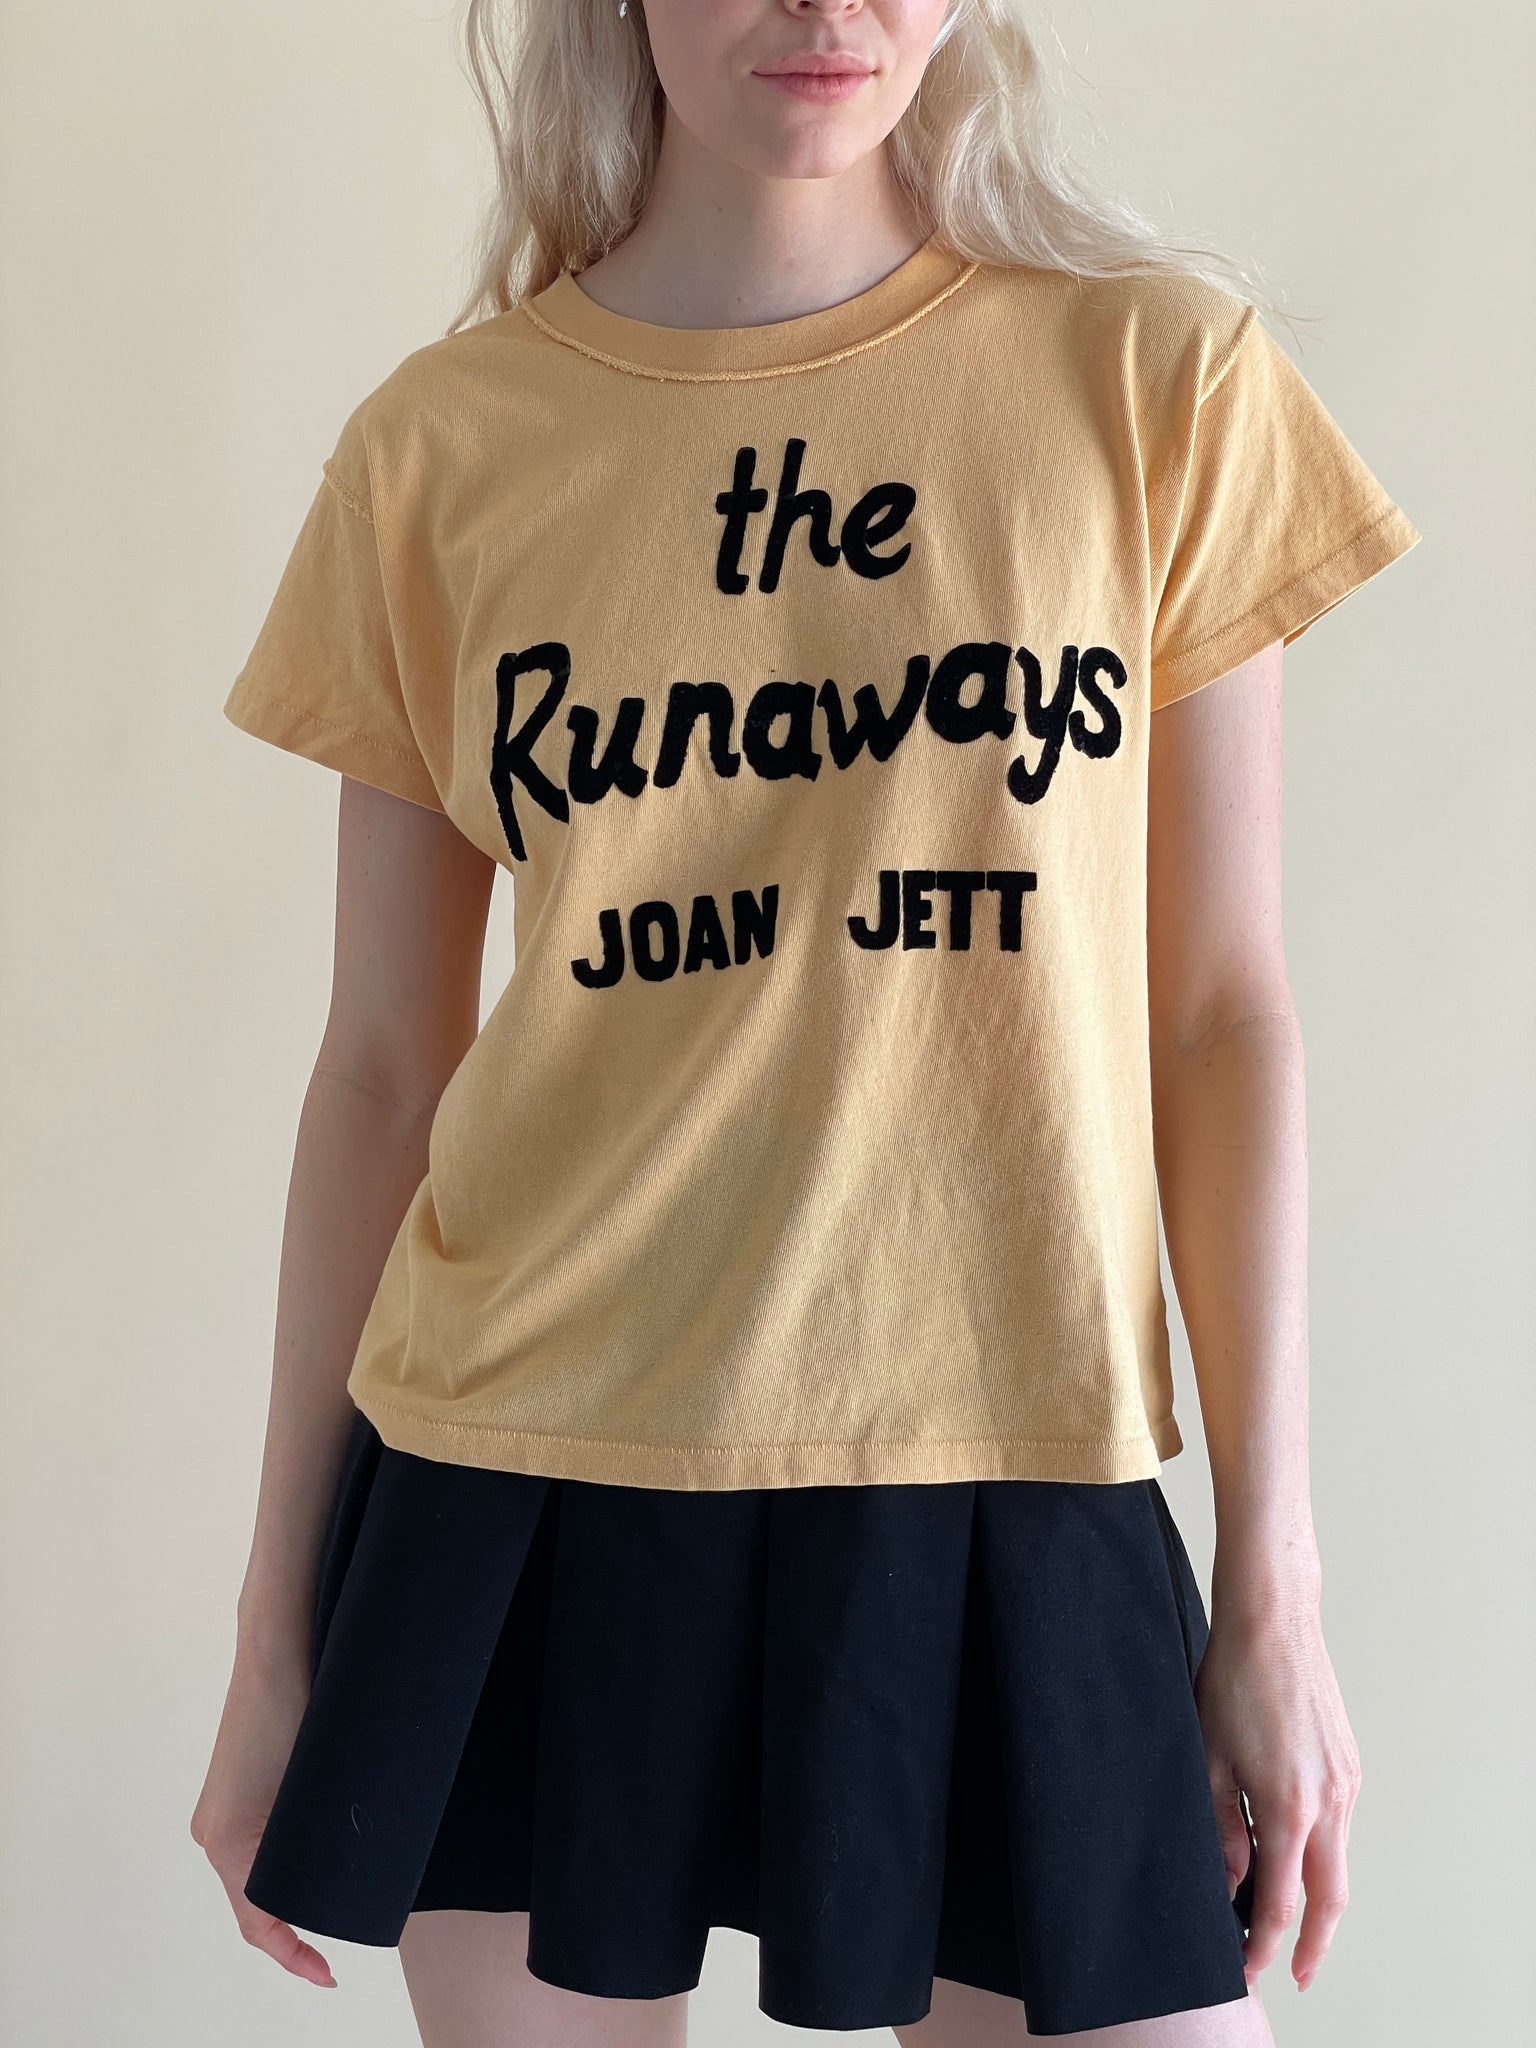 The Joan Jett Runaways Tee